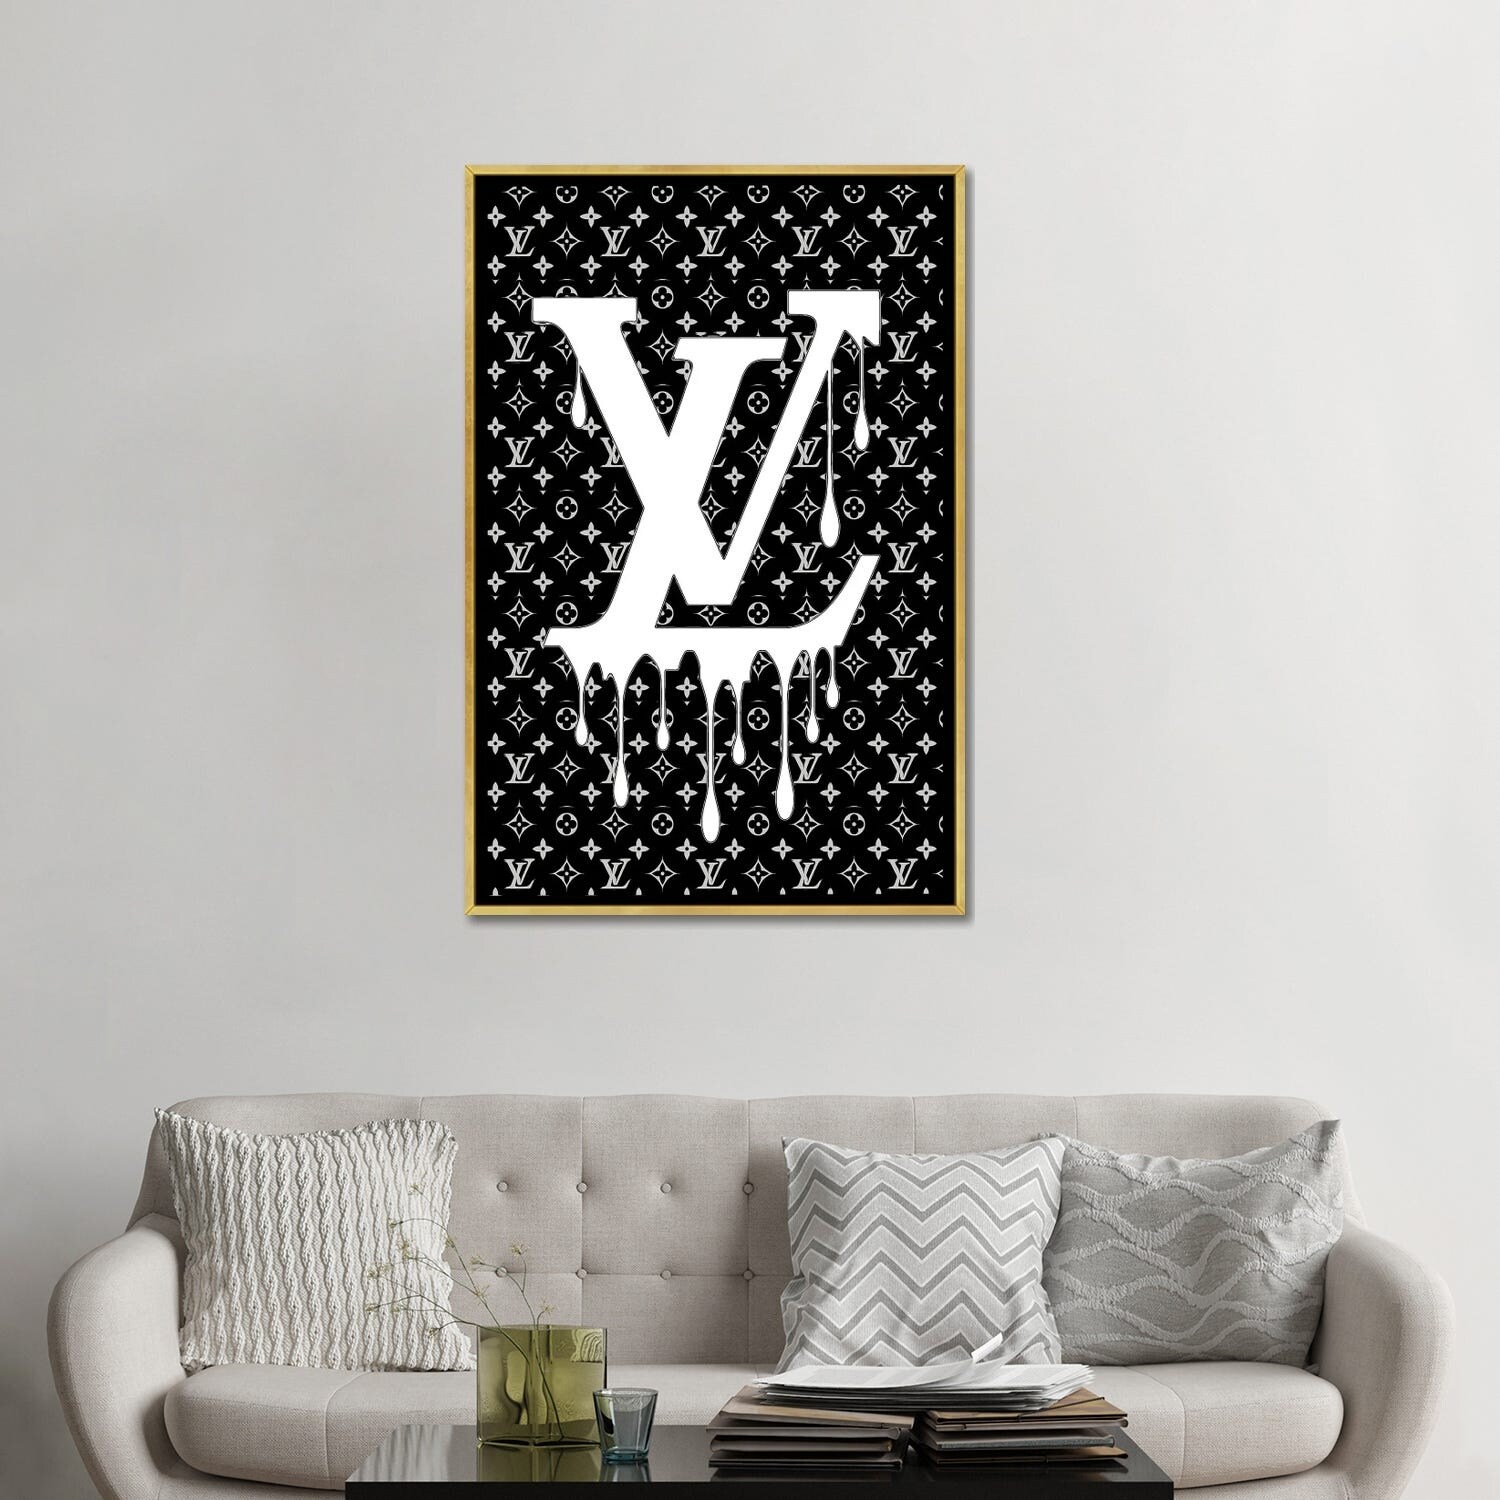 Framed Poster Prints - Louis Vuitton Black and White by Julie Schreiber ( Fashion > Fashion Brands > Louis Vuitton art) - 32x24x1